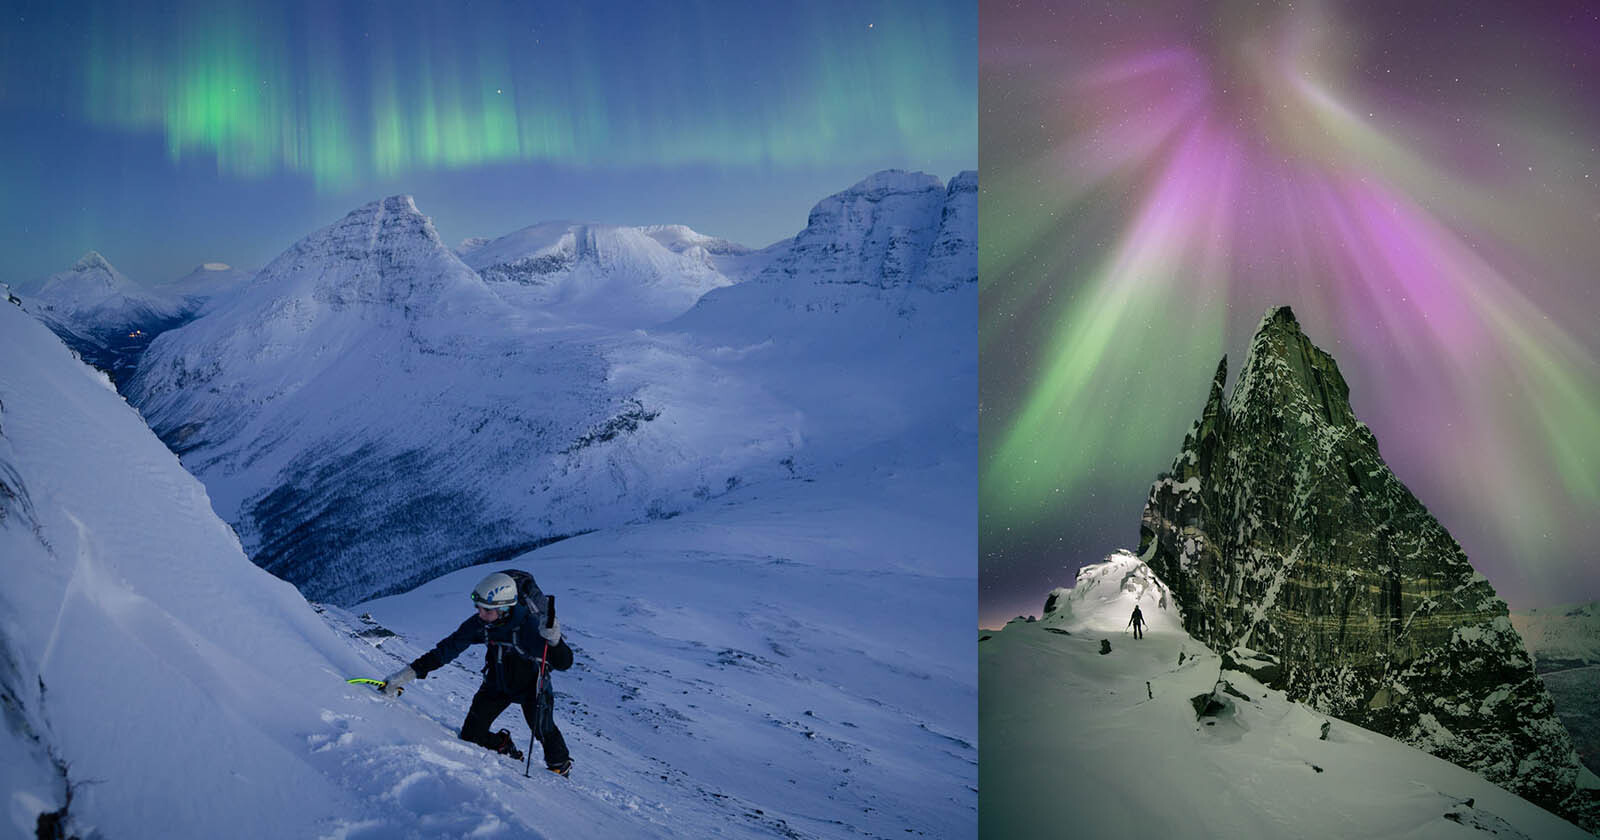  how climbed iconic norwegian mountain epic aurora 